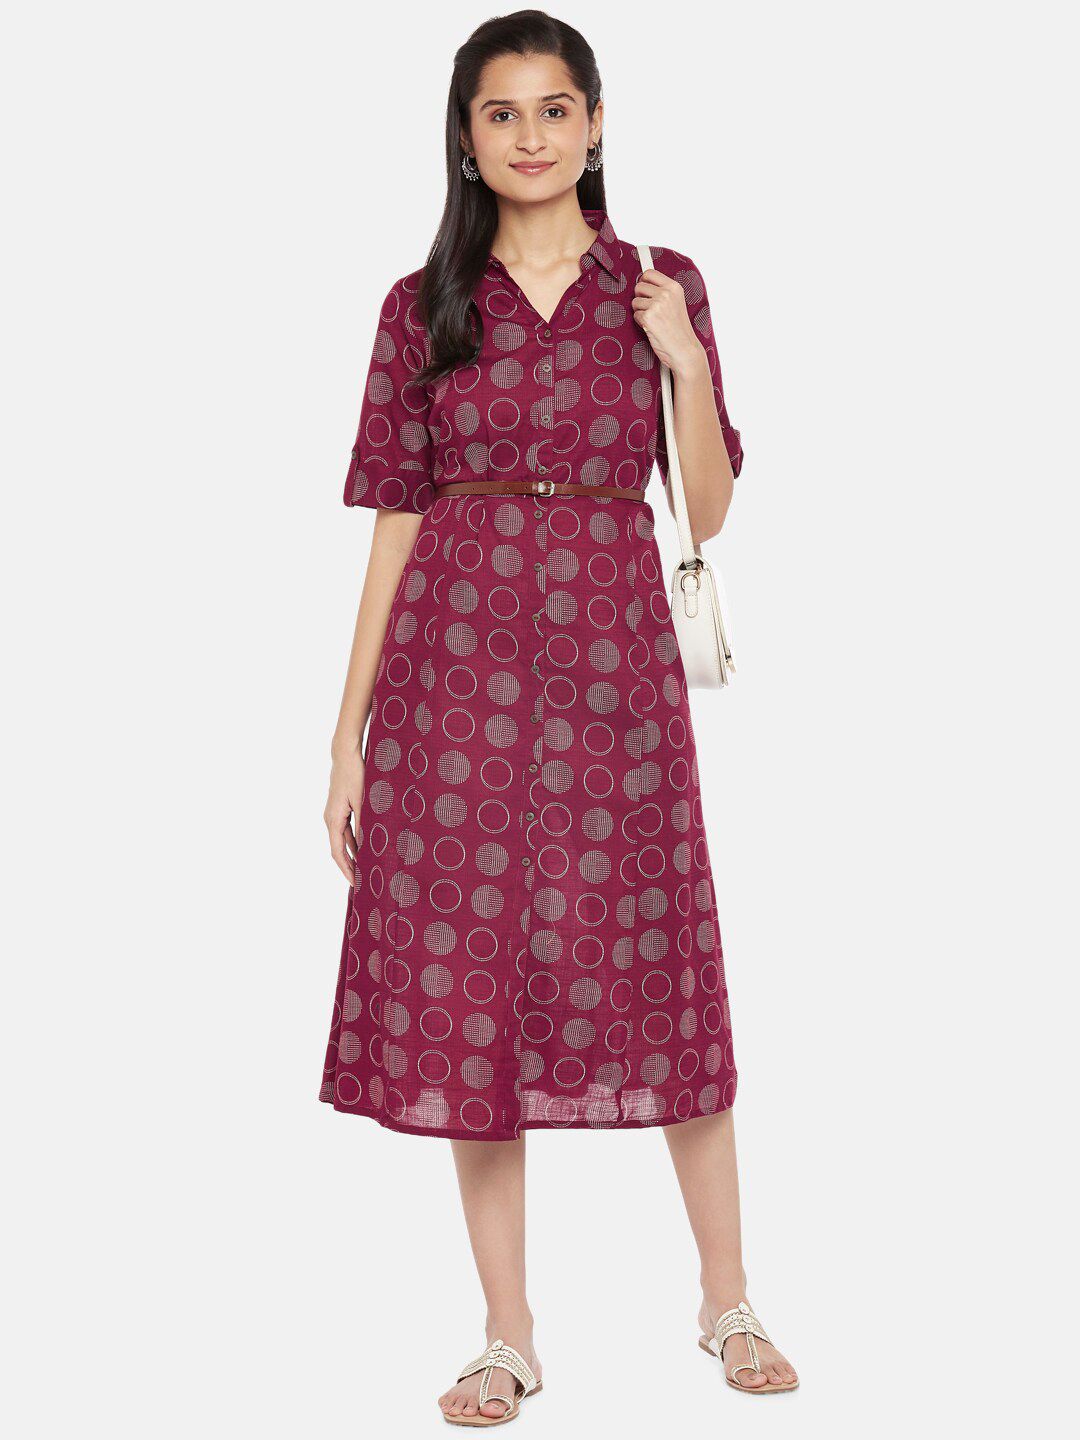 AKKRITI BY PANTALOONS Burgundy Pure Cotton Shirt Midi Dress Price in India